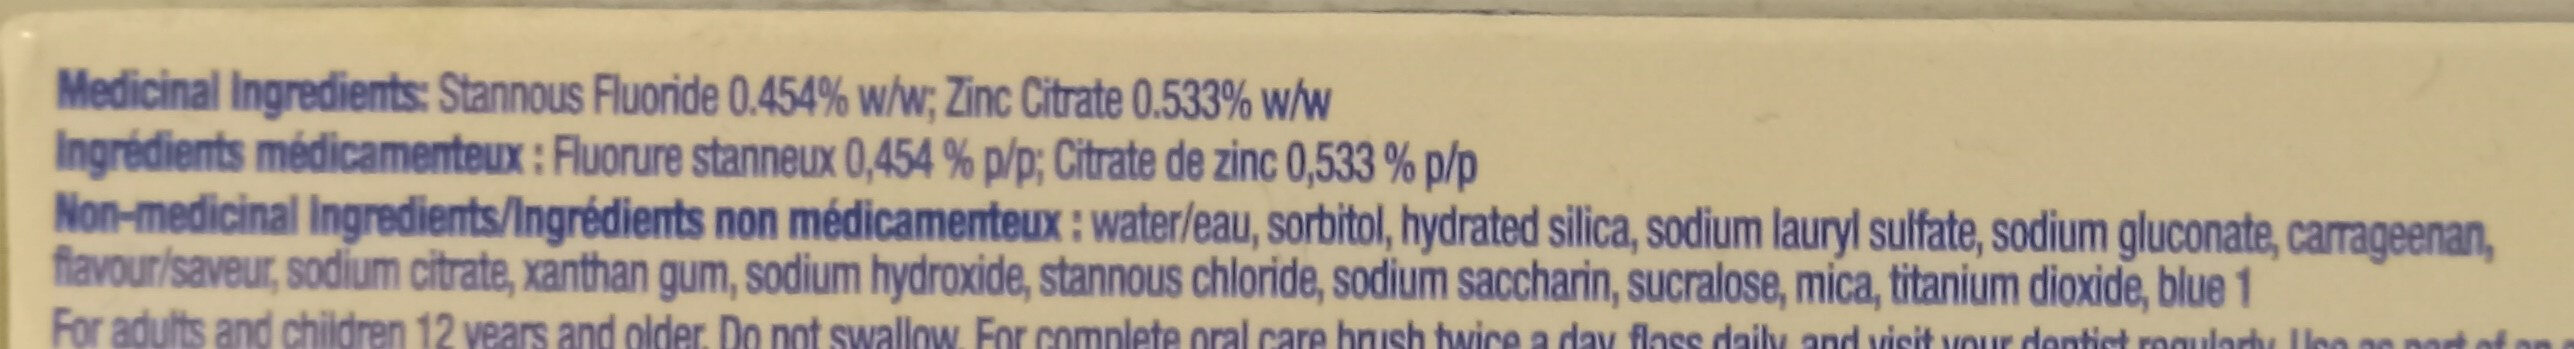 Whitening Gel Flouride Toothpaste - Ingrédients - en